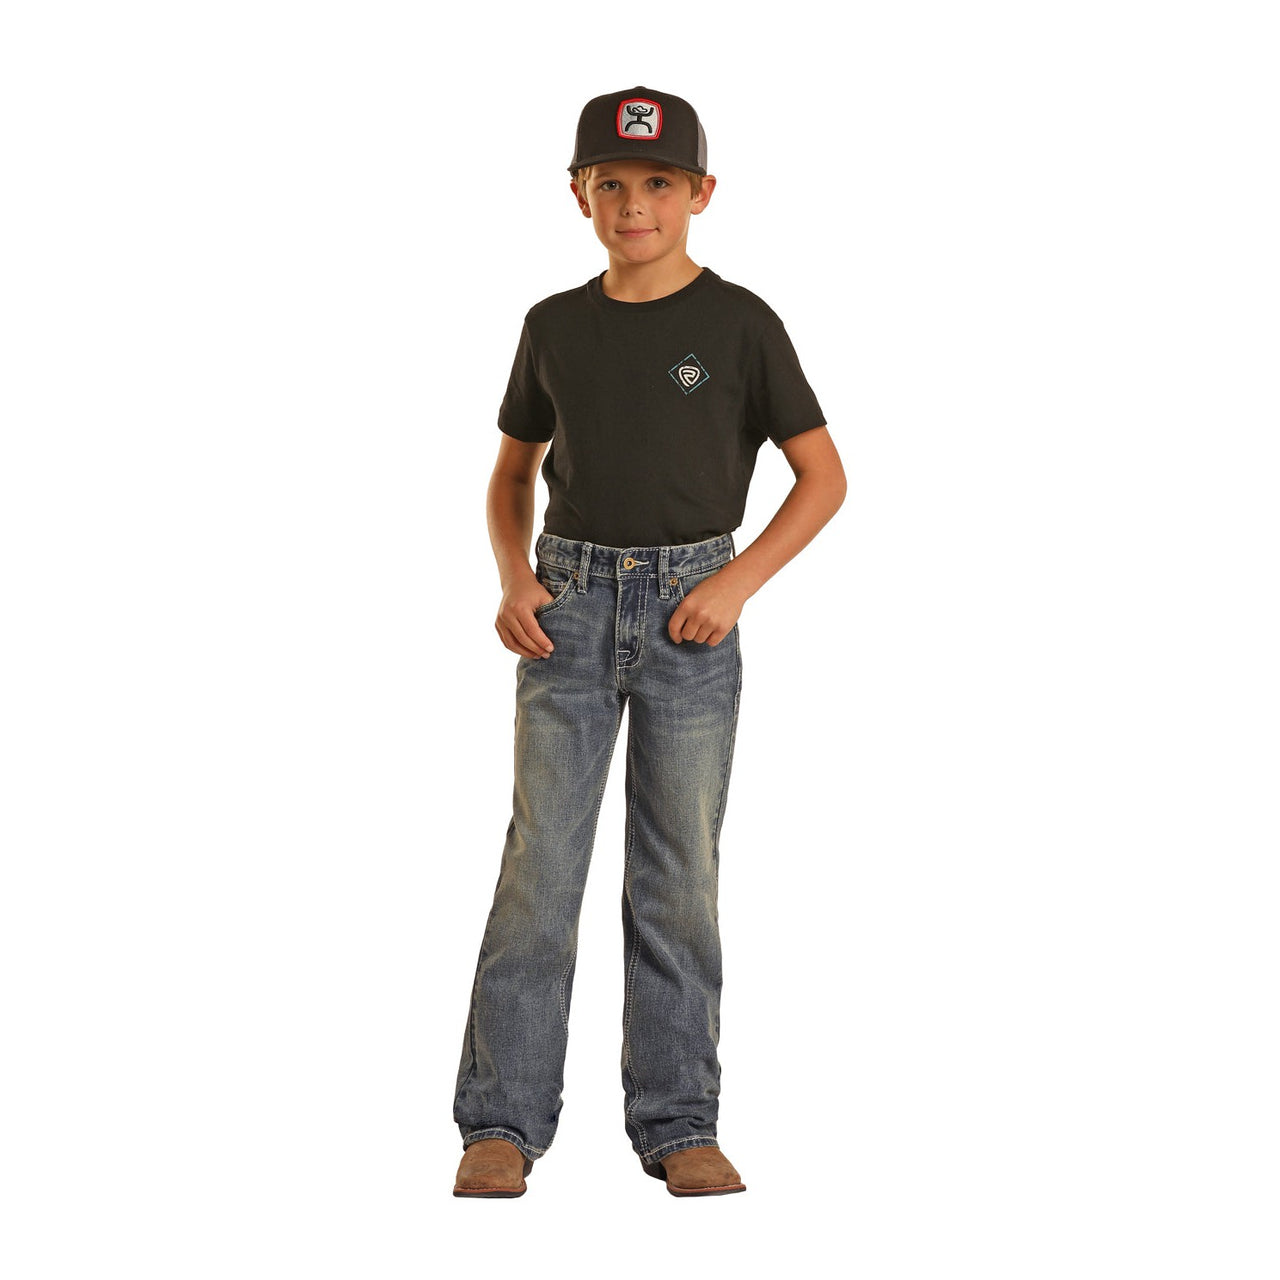 Hooey Boy's Two Tone Bootcut Jeans - Medium Vintage